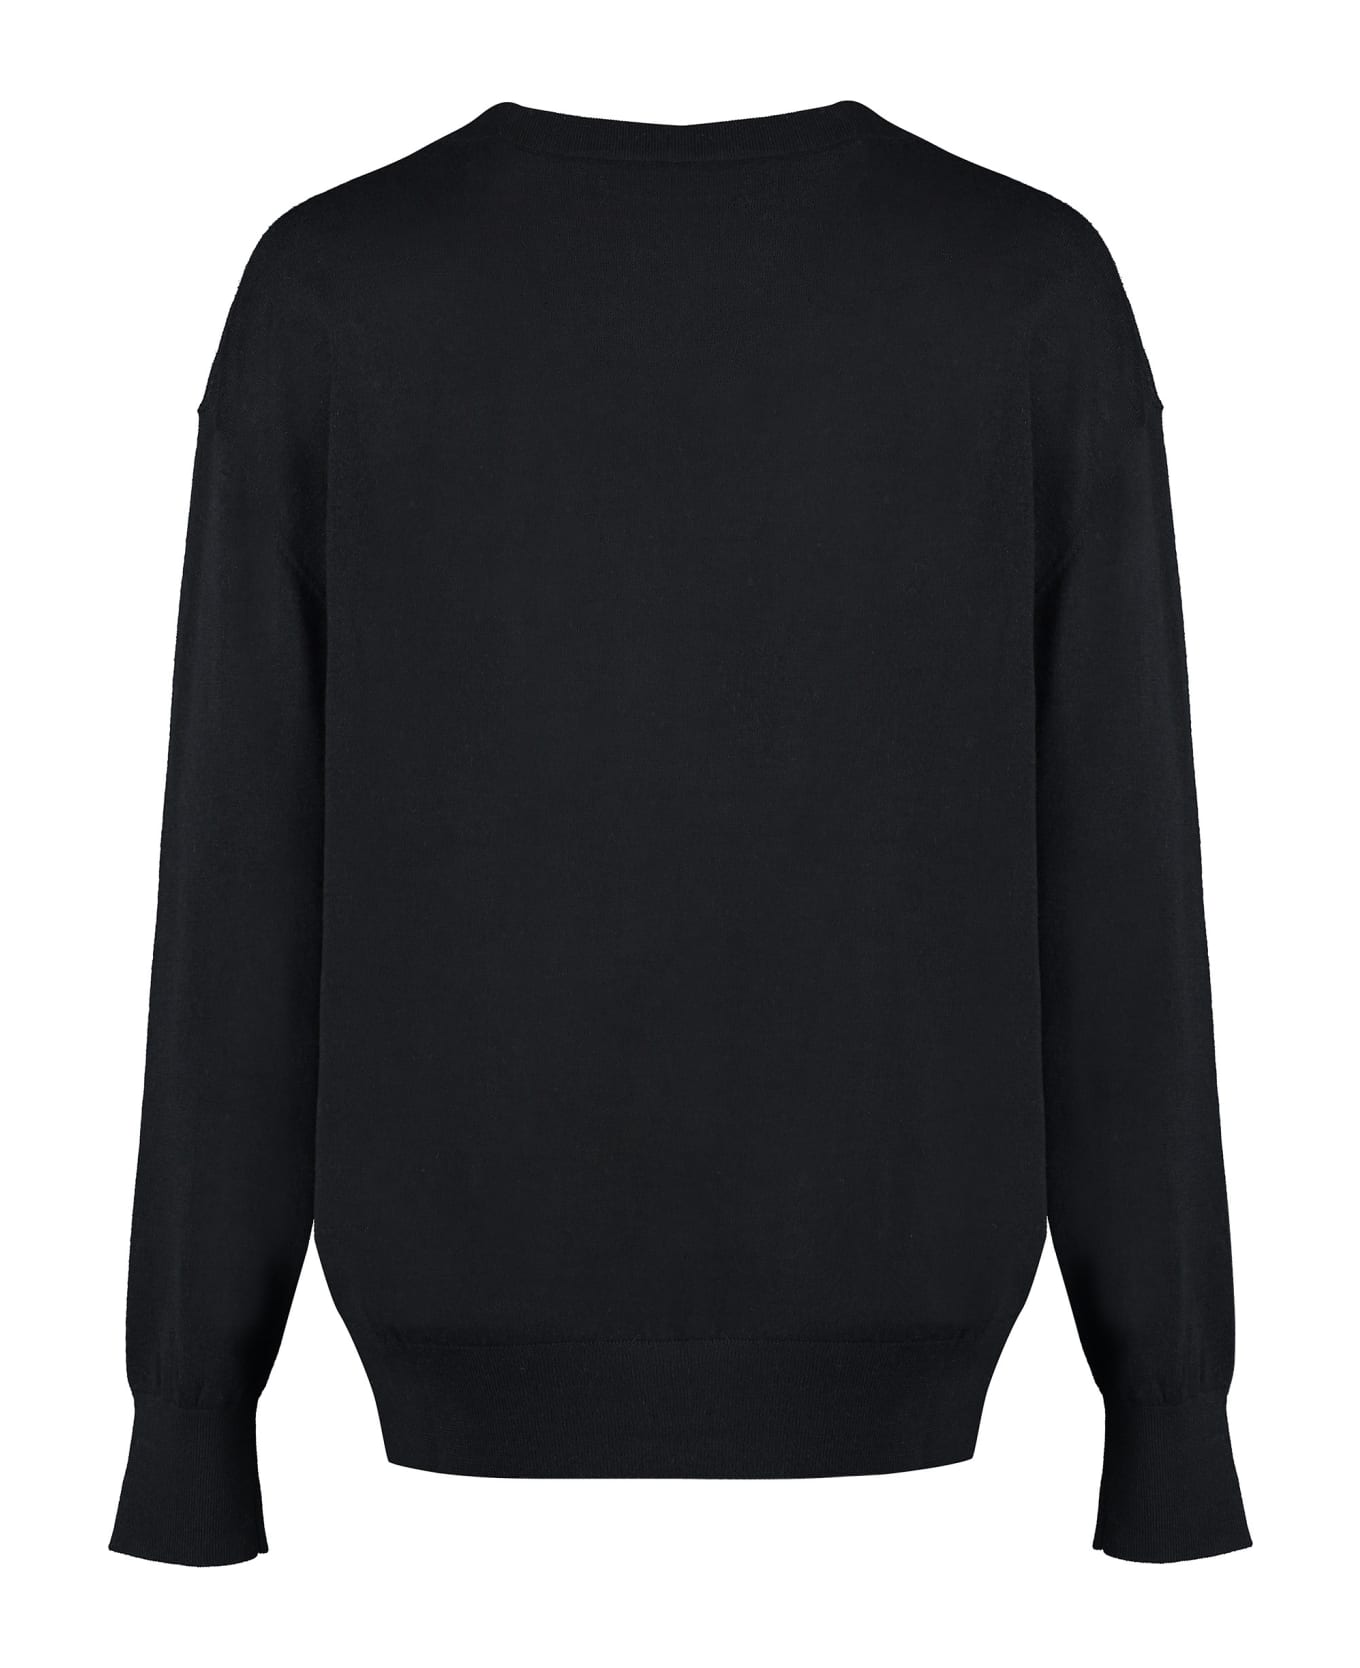 Parosh Cashmere V-neck Sweater - Black